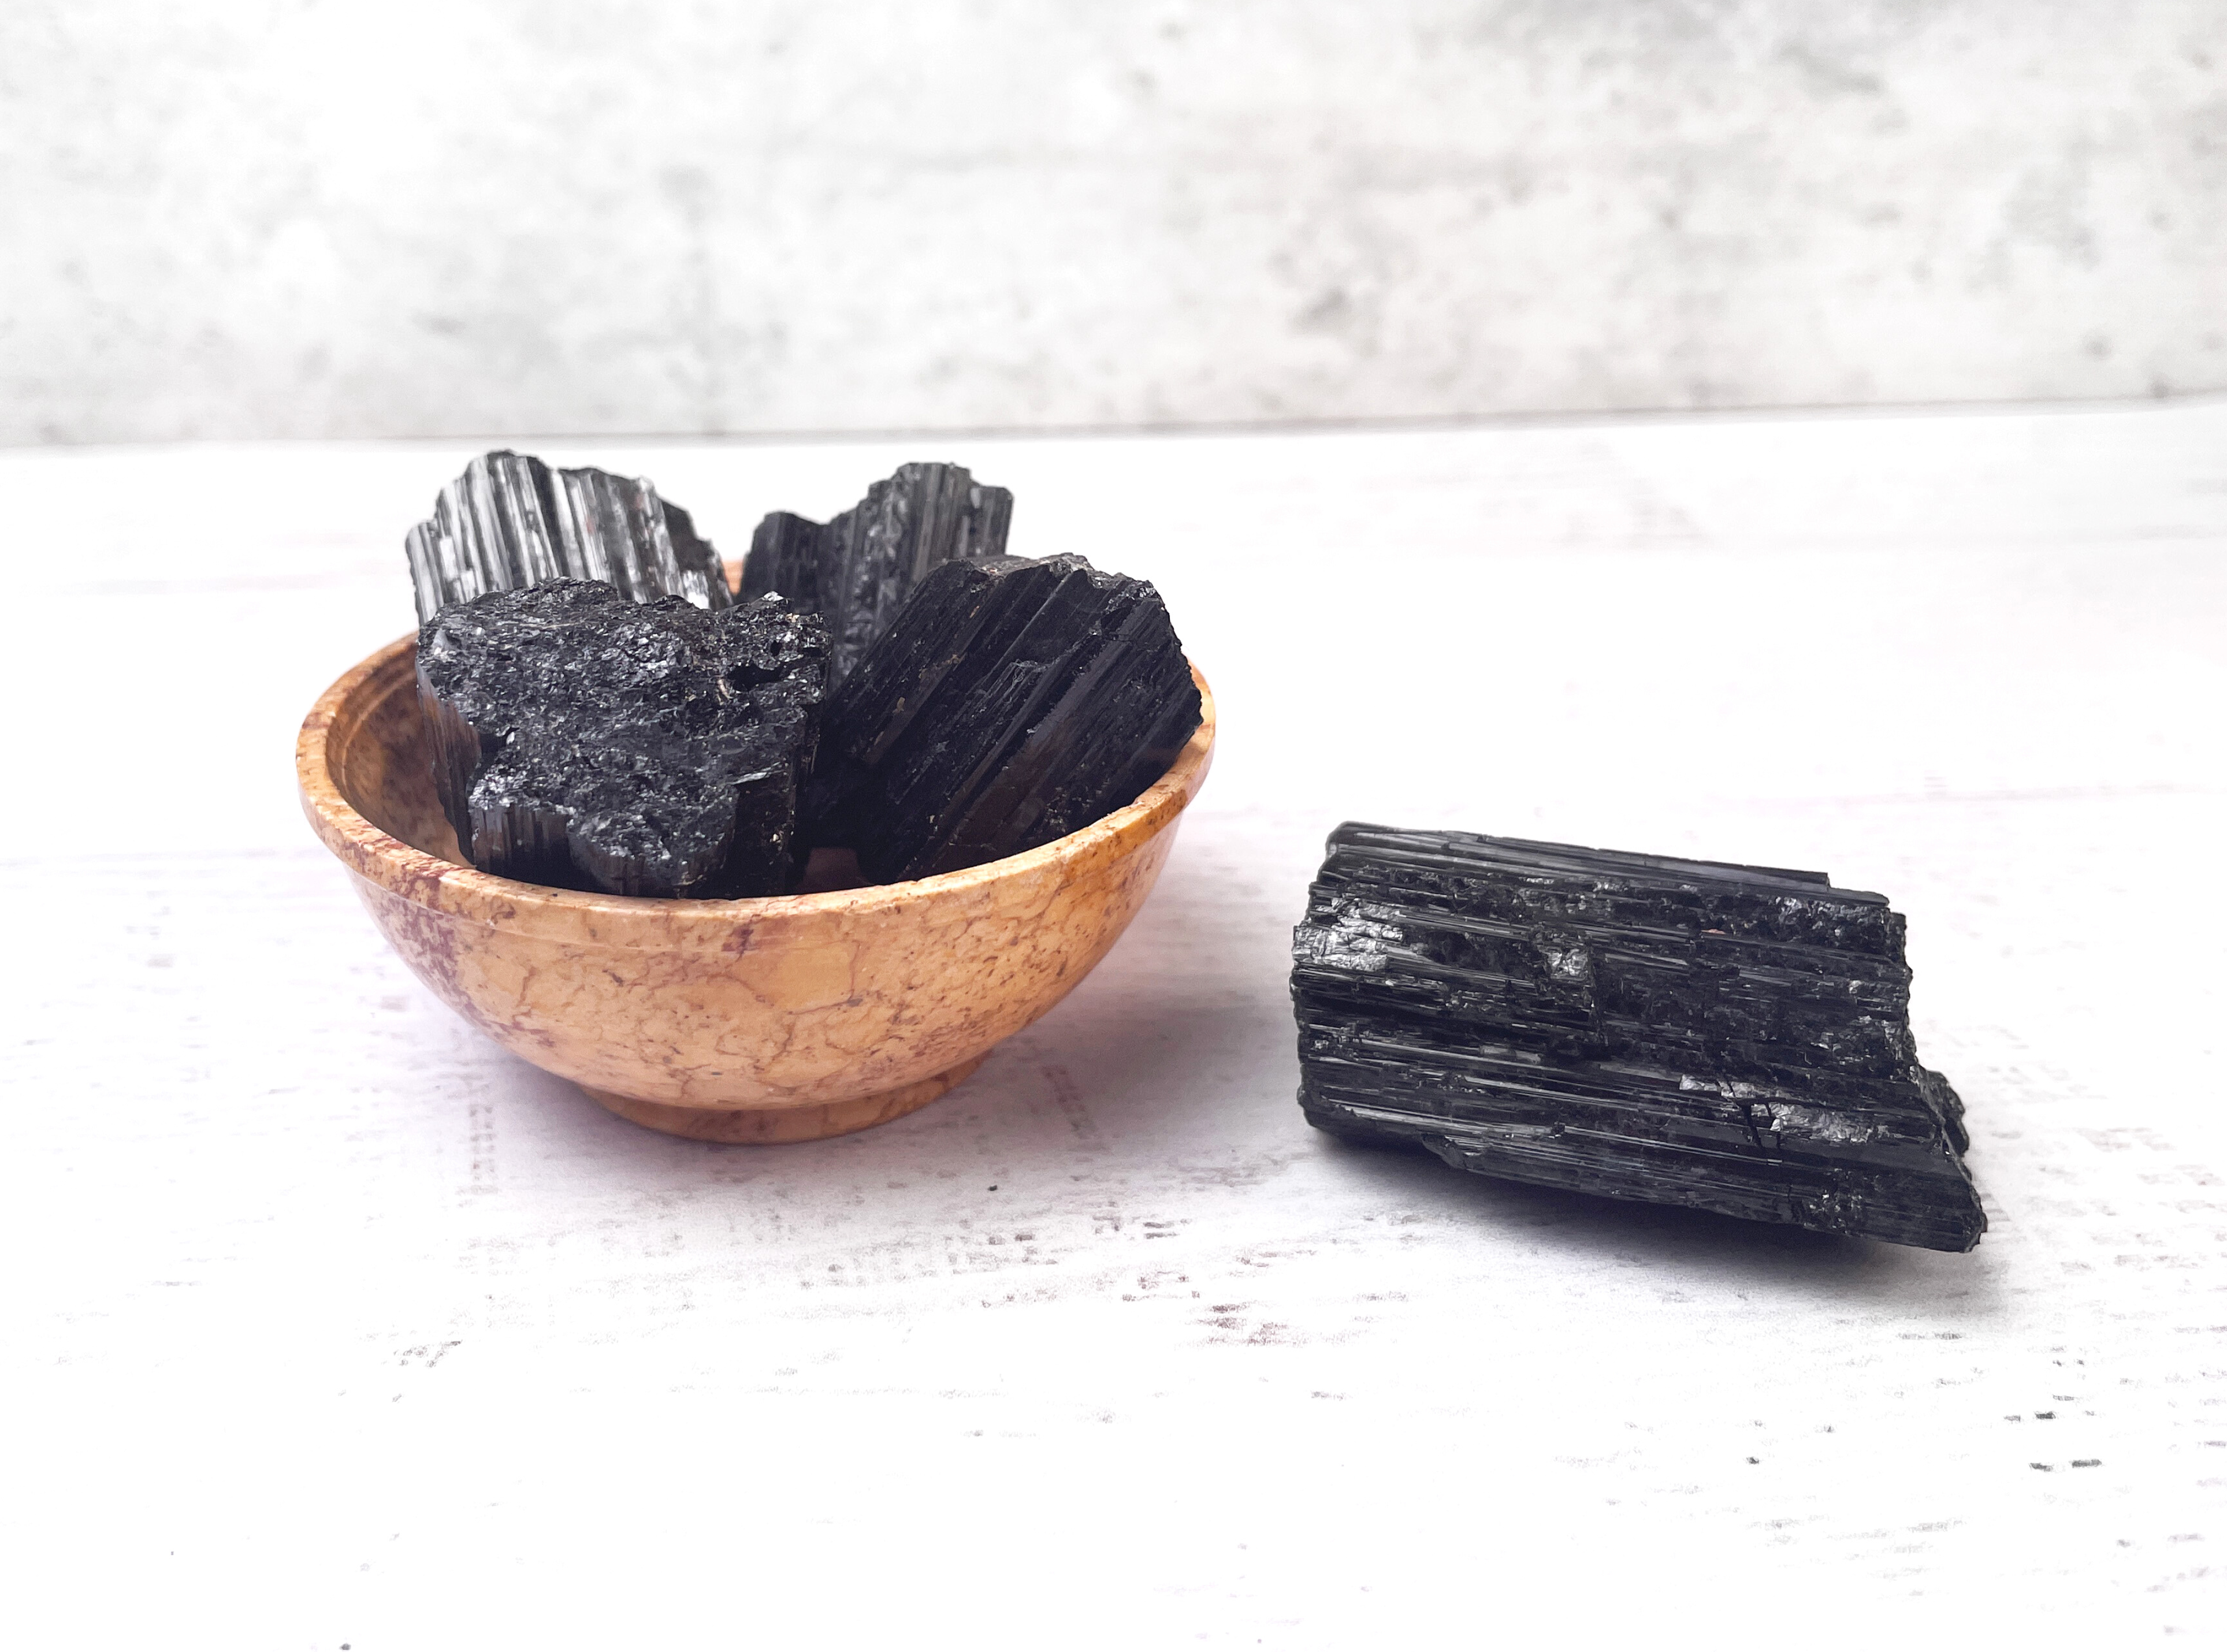 Buy Online Latest and Unique Black Tourmaline - Grounding, Protection, Transform Negativity | Shop Best Spiritual Items - The Mystical Ritual